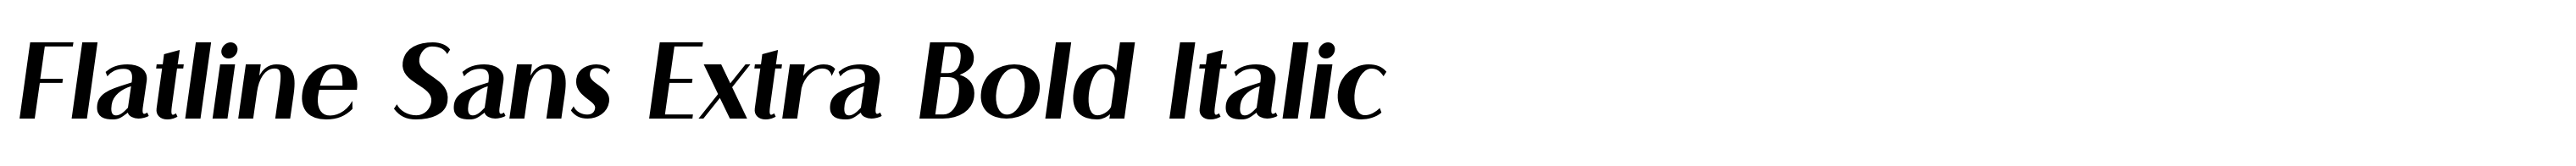 Flatline Sans Extra Bold Italic